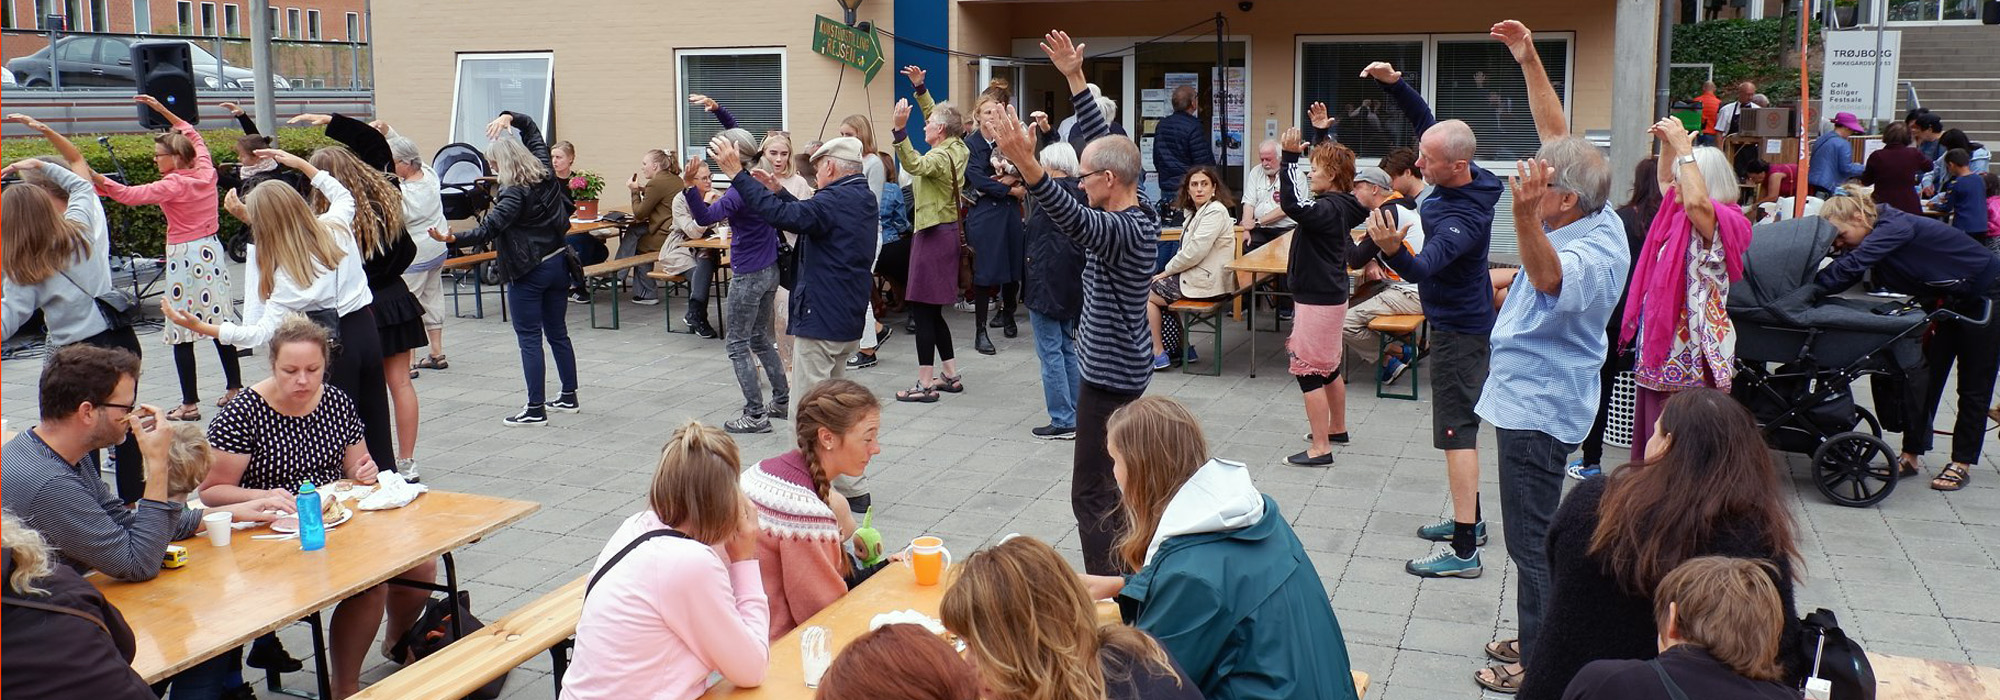 vejfest Trøjborg 2019 fællesskab og sjovt samvær